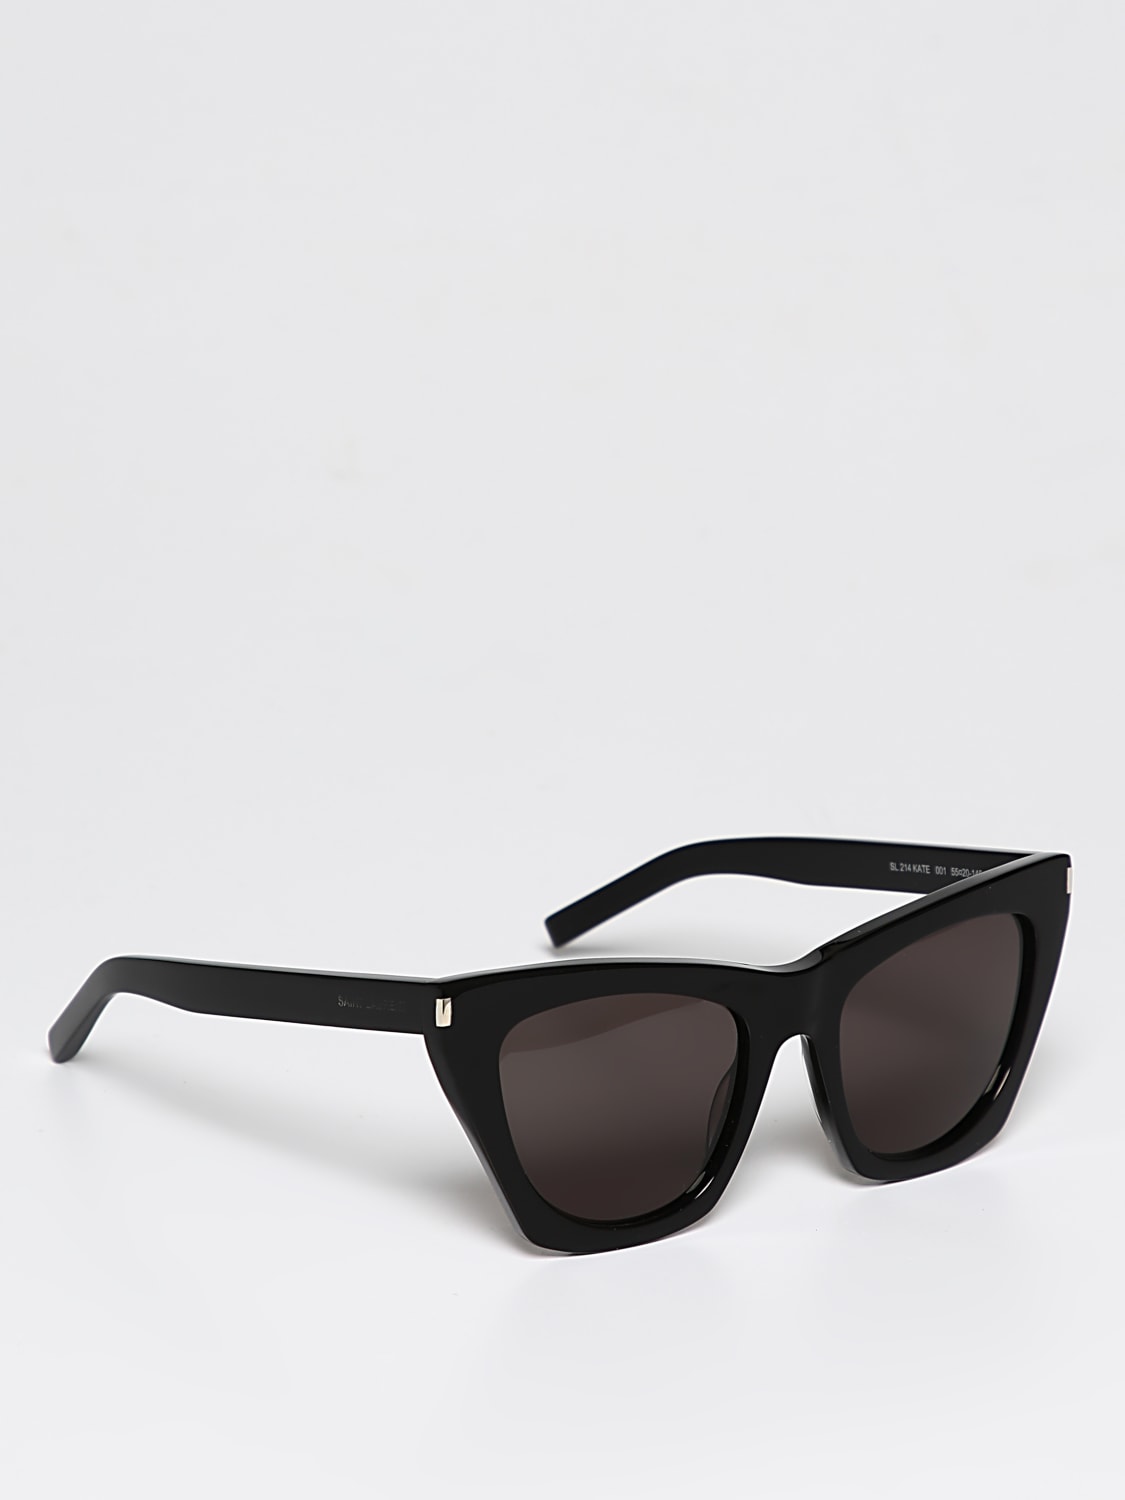 Saint Laurent Sunglasses for Women